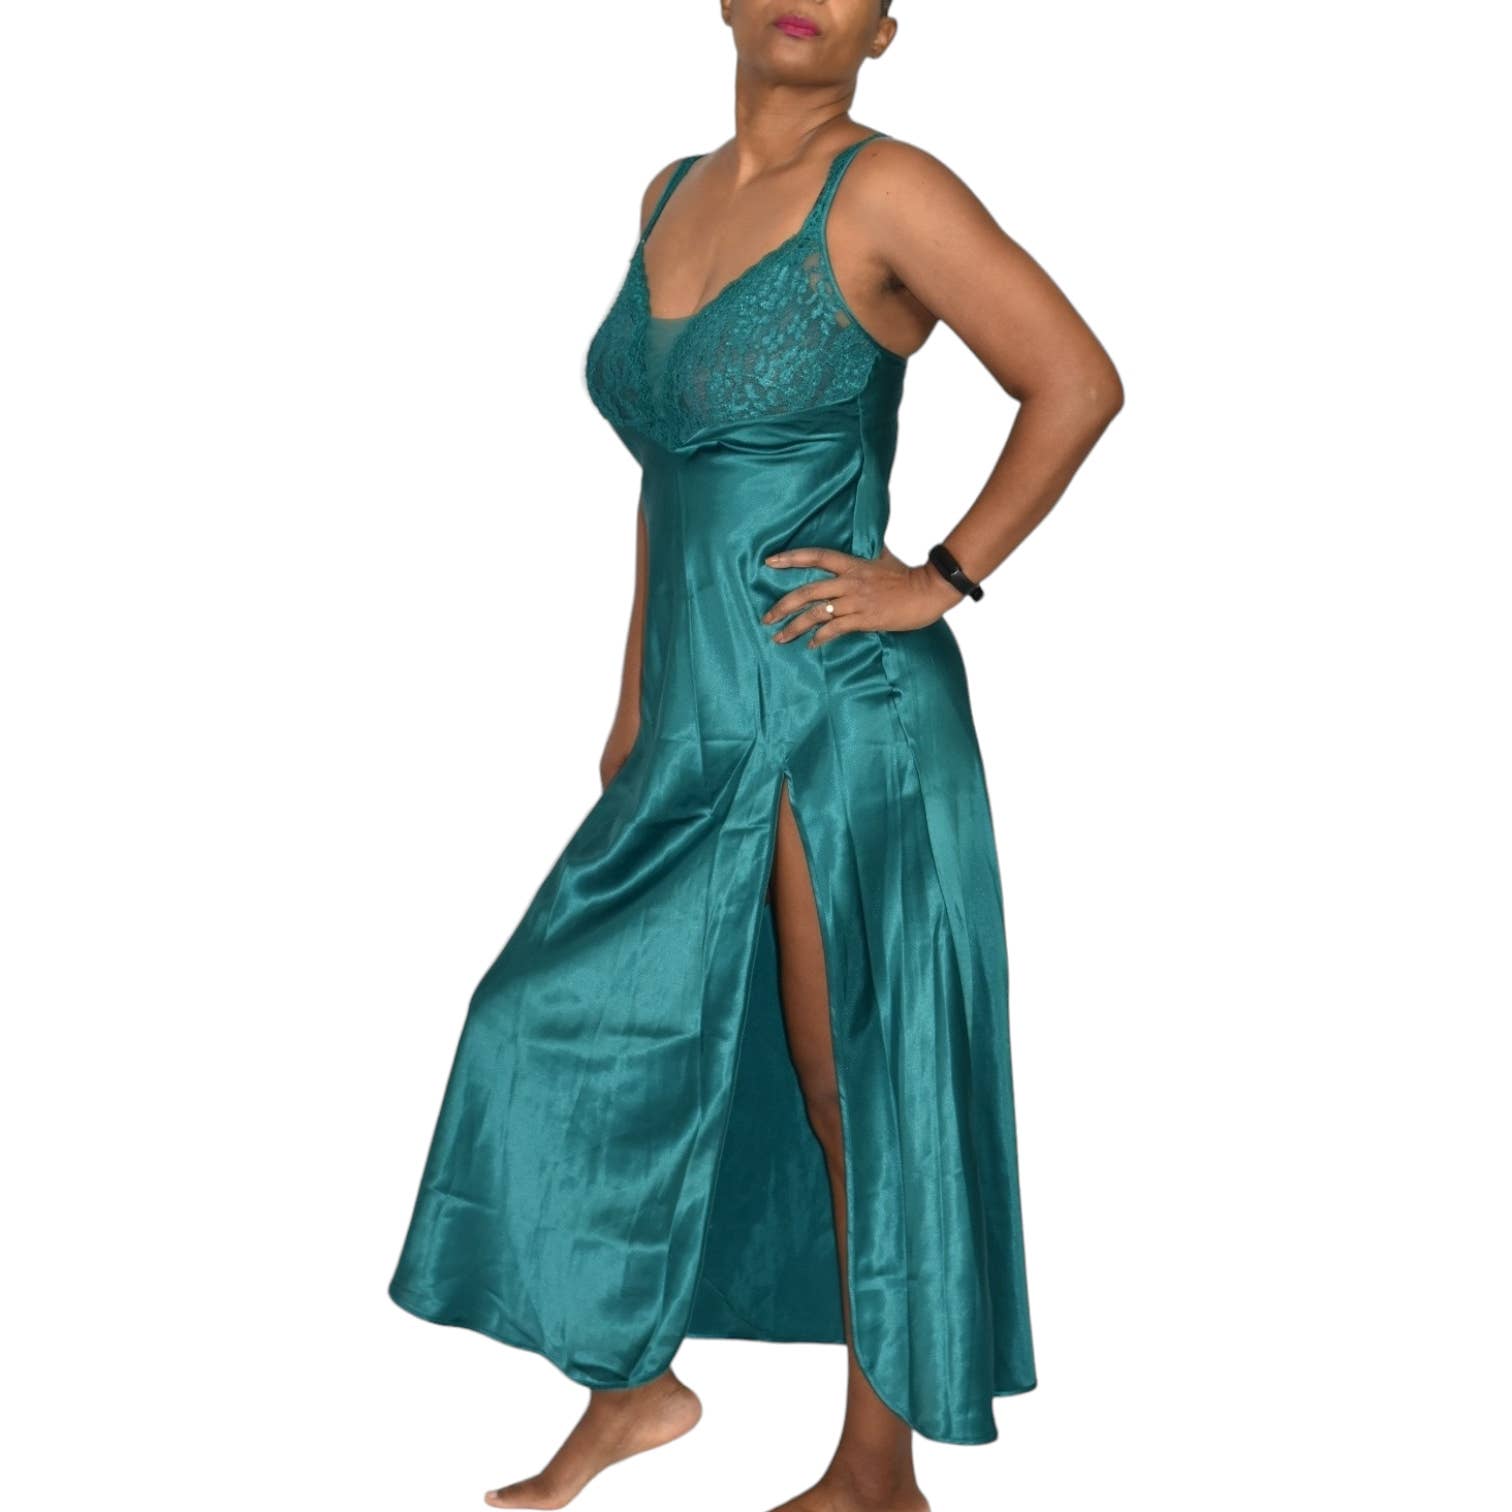 Vintage Victorias Secret Satin Nightgown Green Mesh Lace Long Maxi Slip High Slit Gold Label Size XS